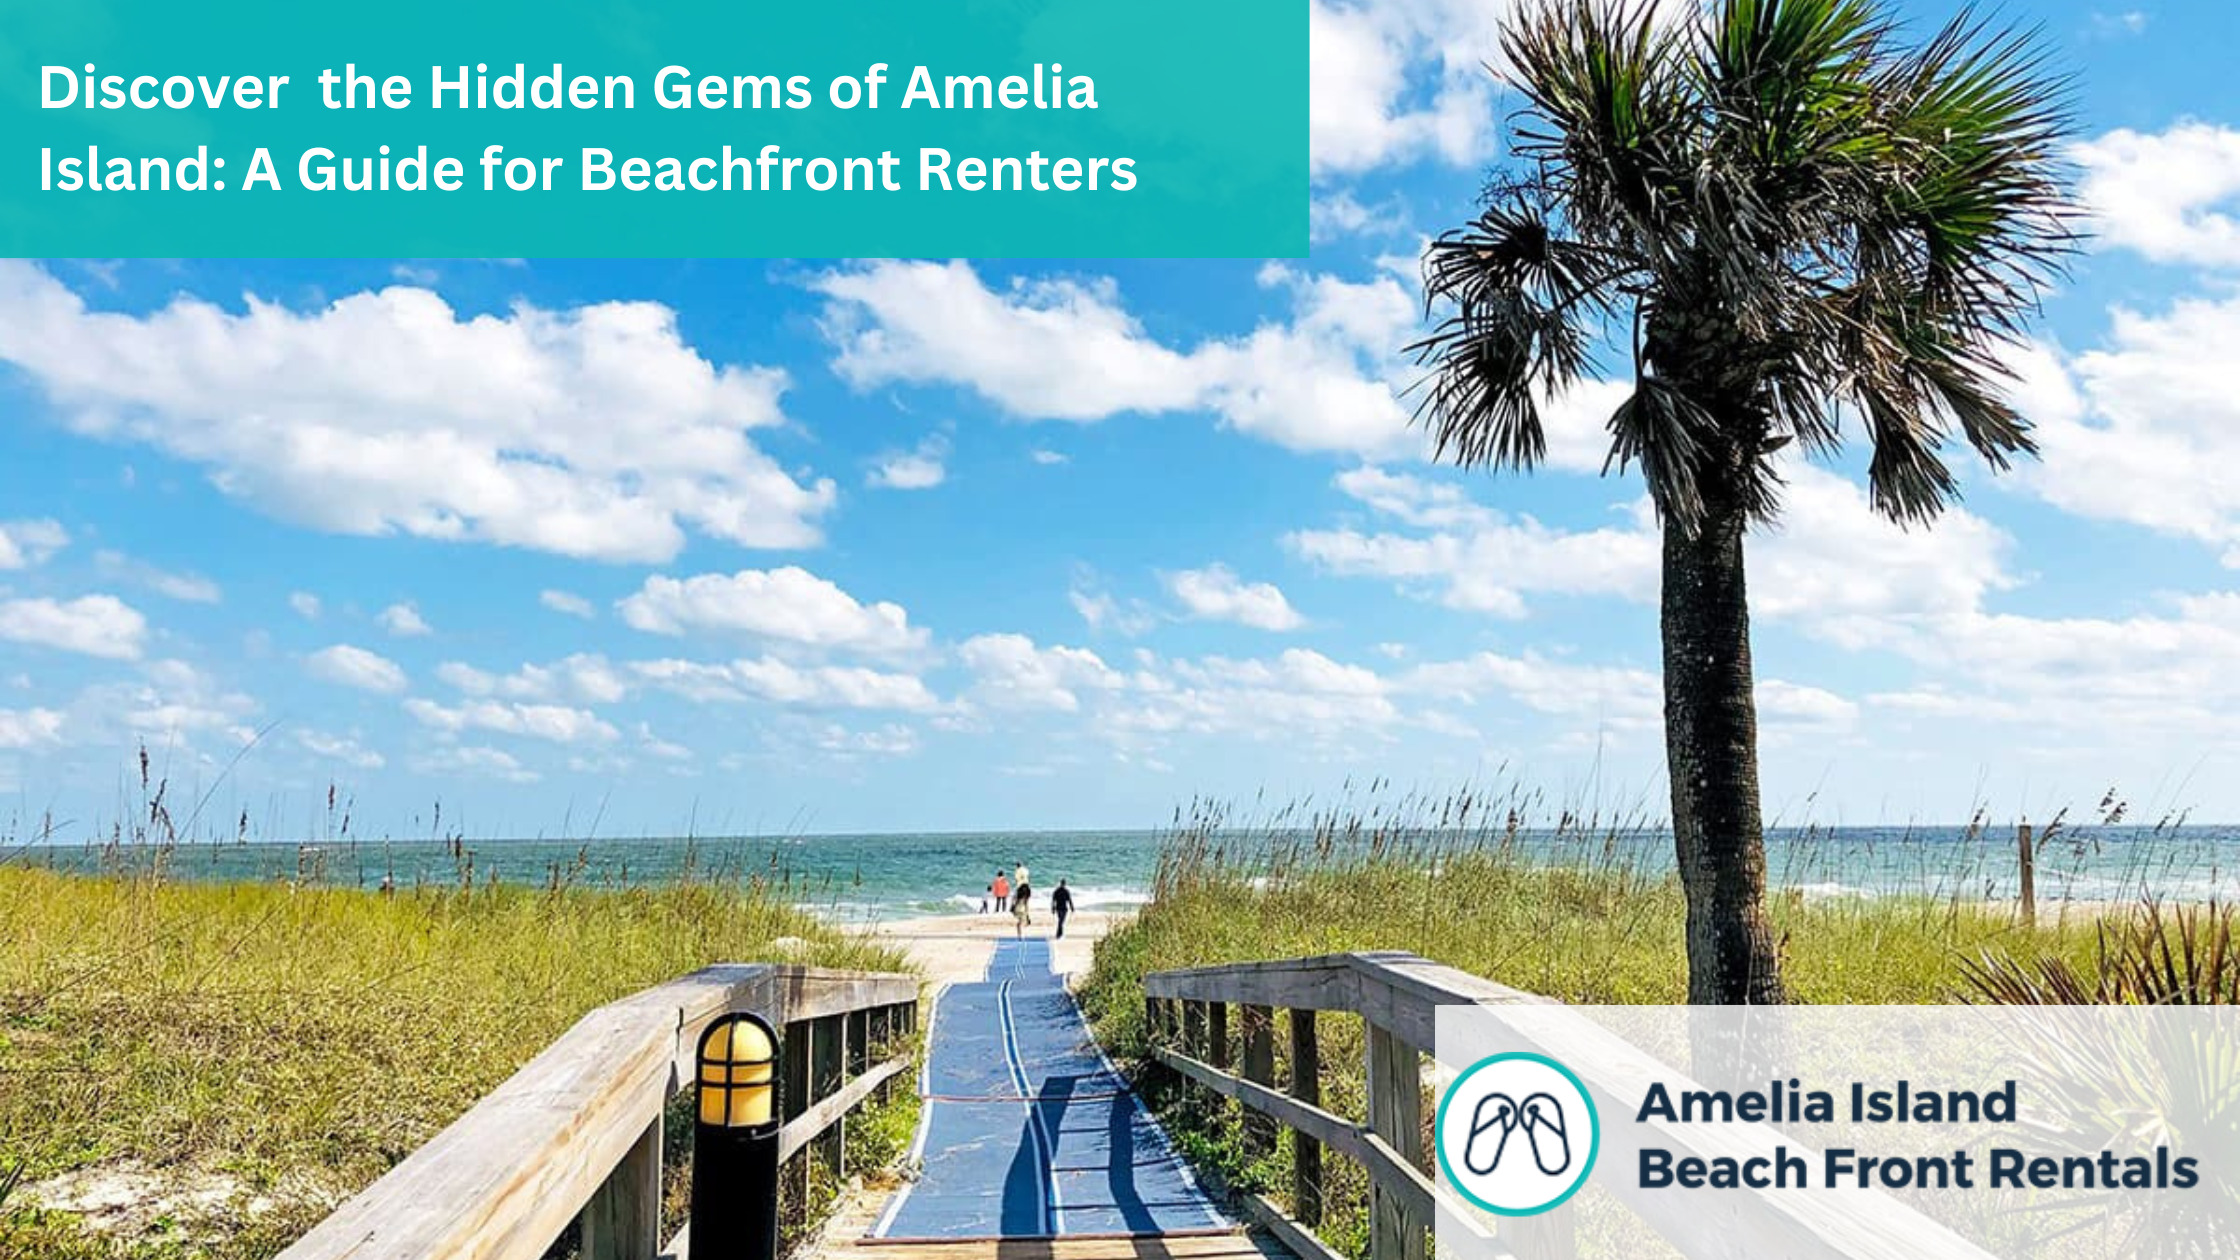 Discover the Hidden Gems of Amelia Island - Discover the Hidden Gems of Amelia Island: A Guide for Beachfront Renters